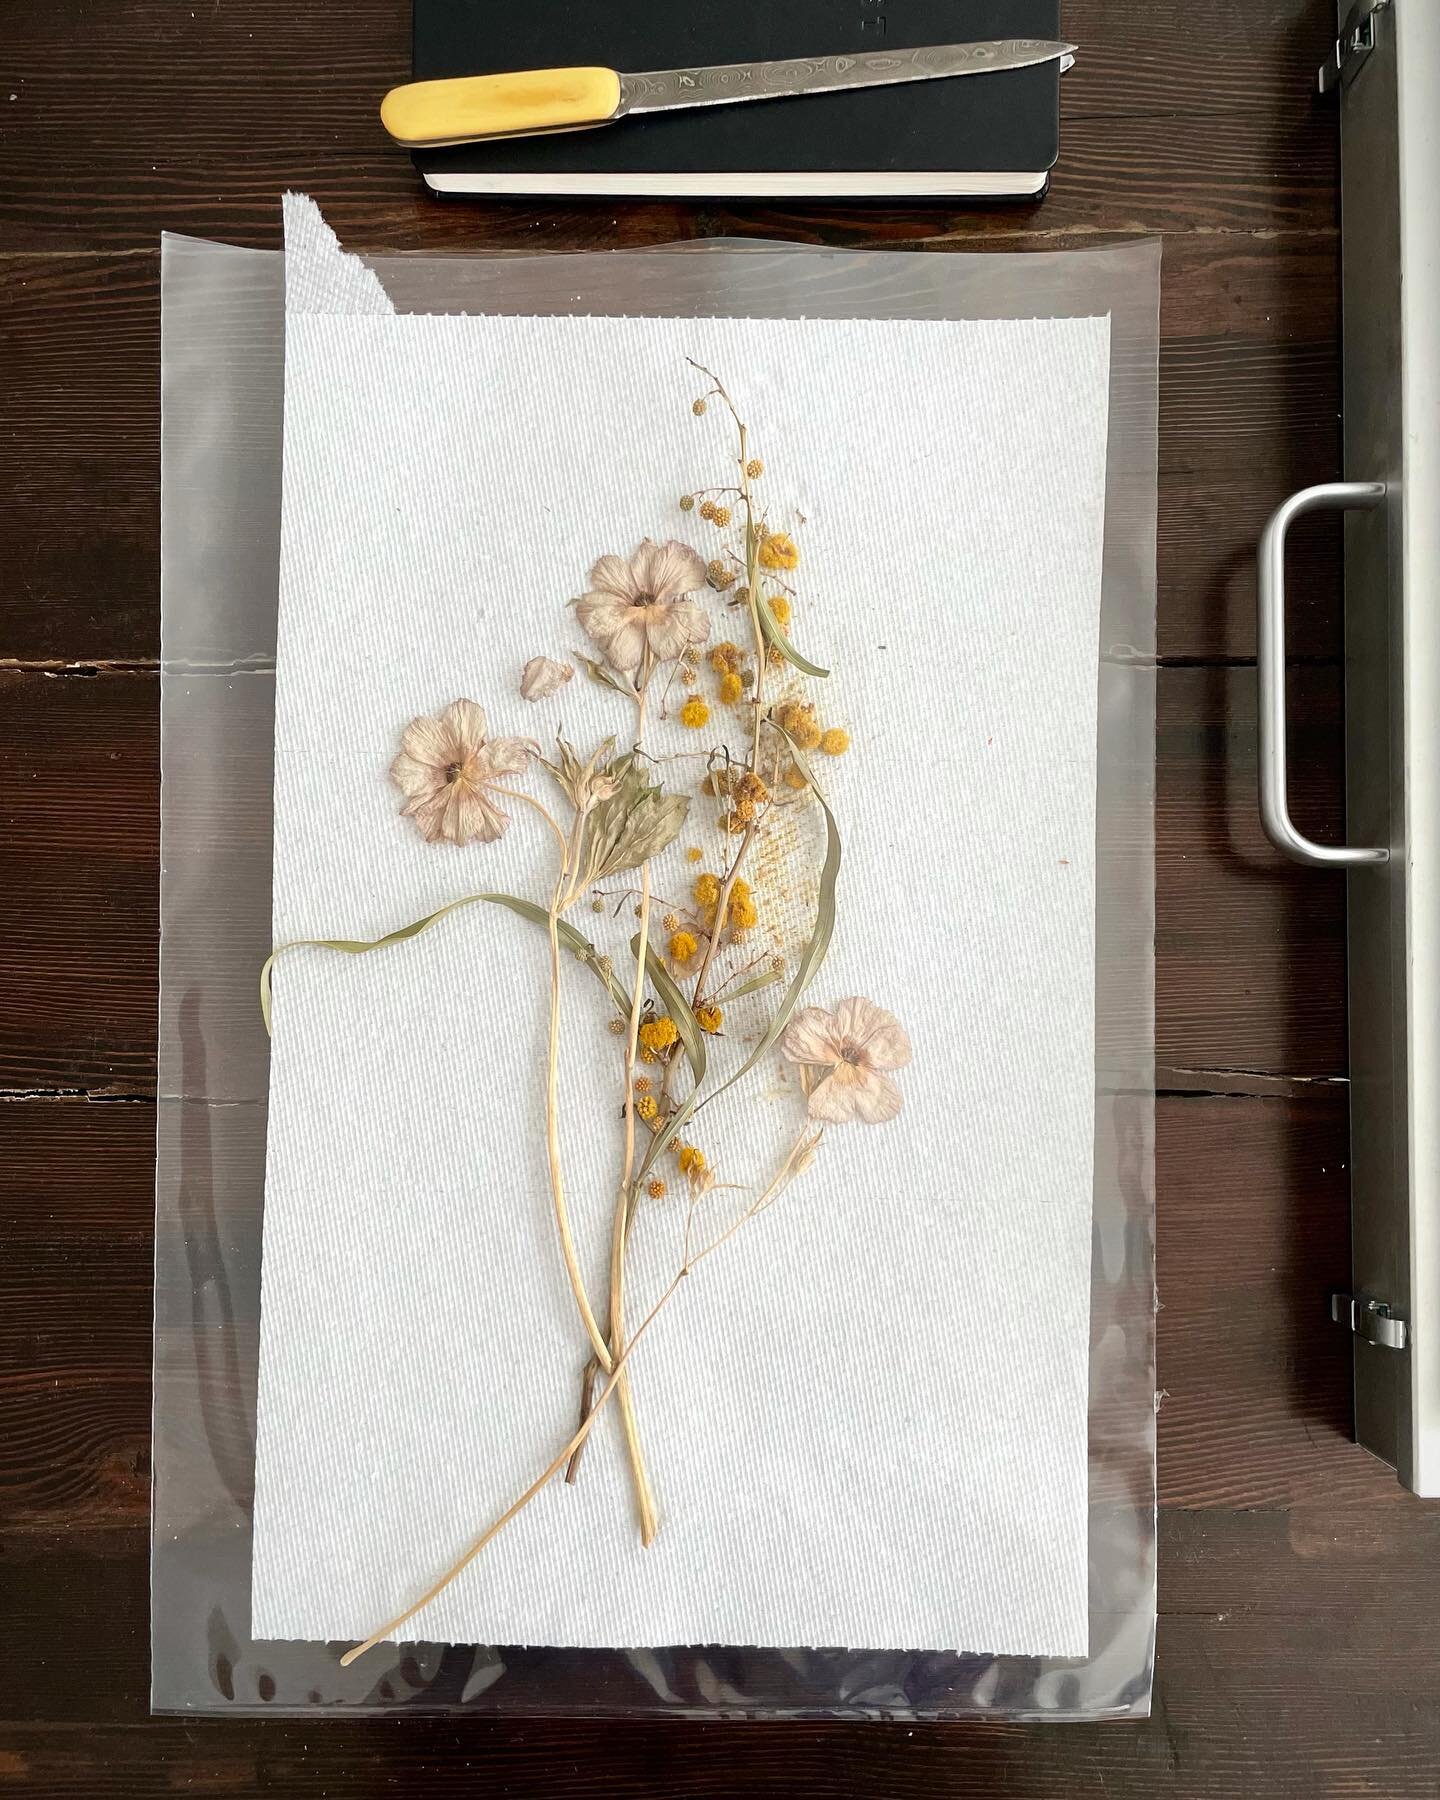 Art room project #pressedflowers #studio #art #driedflowers